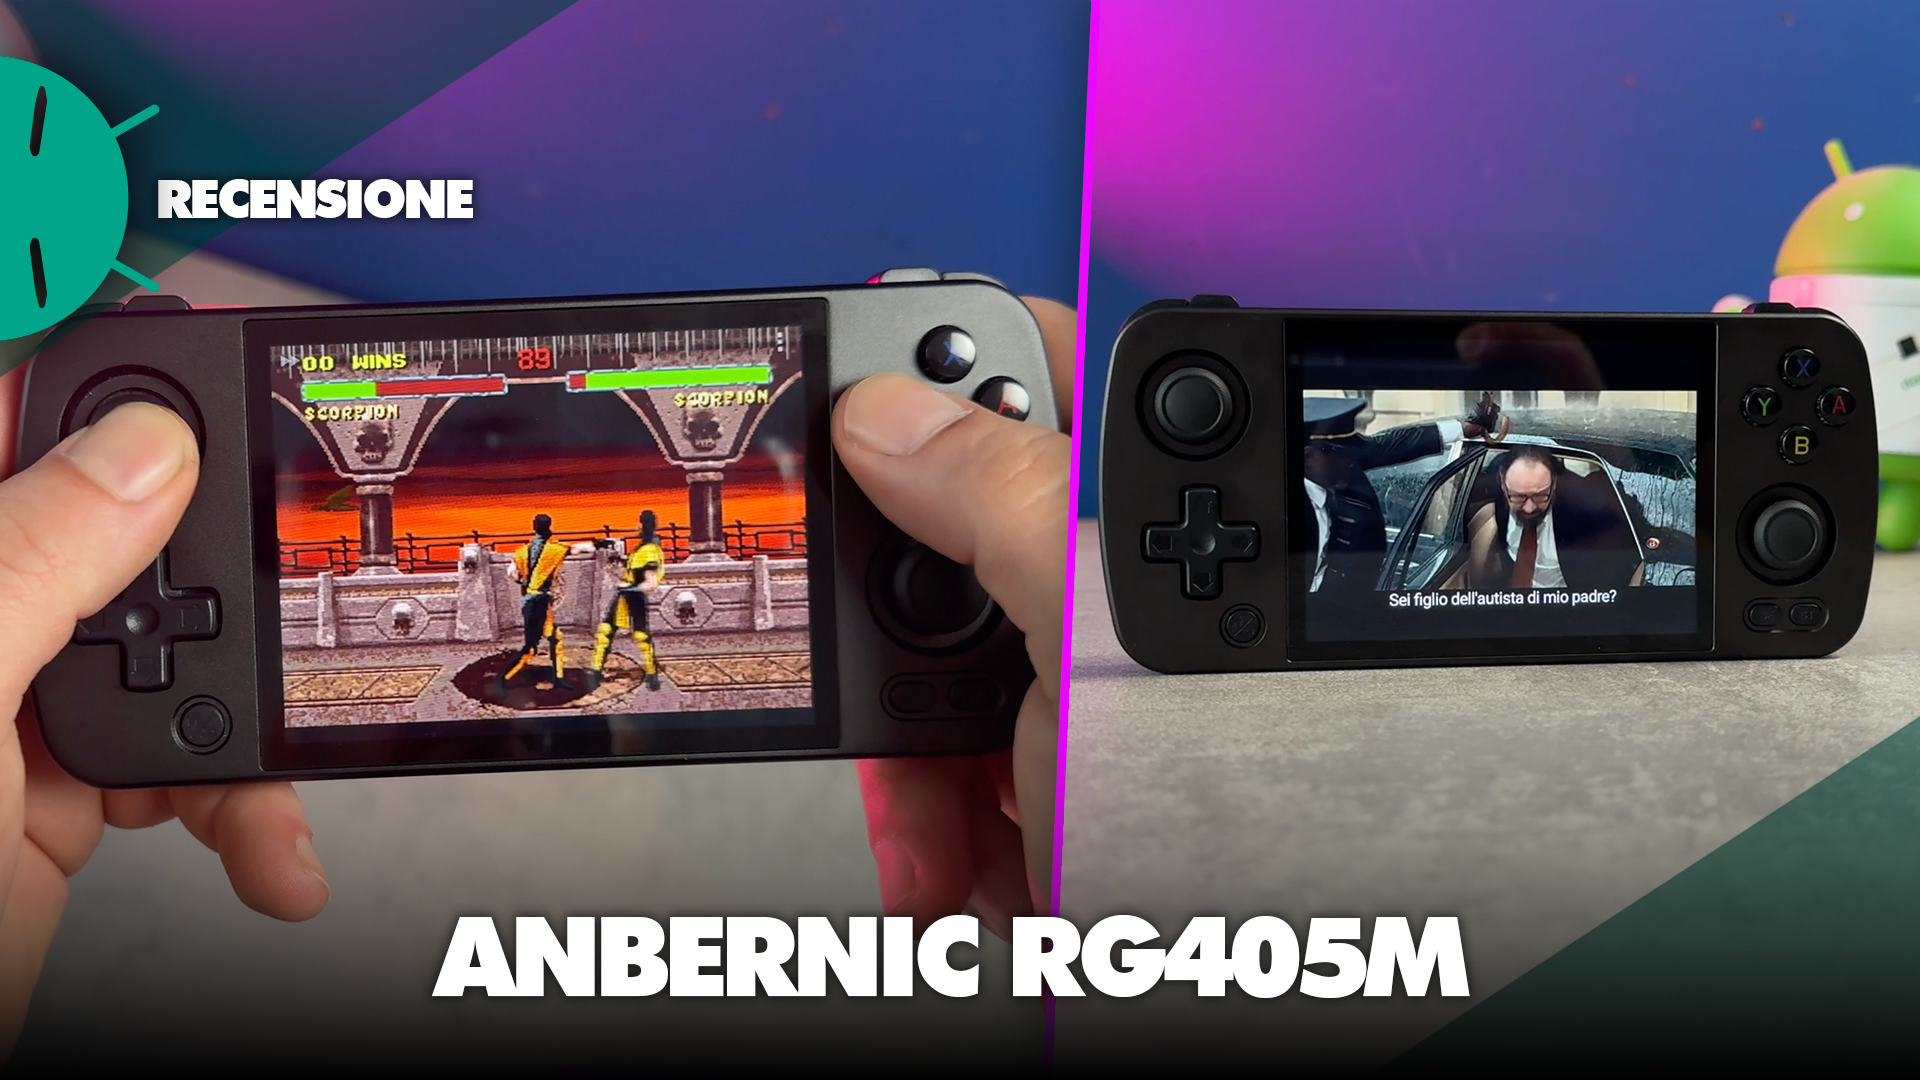 ANBERNIC RG405M Review - Their Most Powerful Retro Handheld So Far